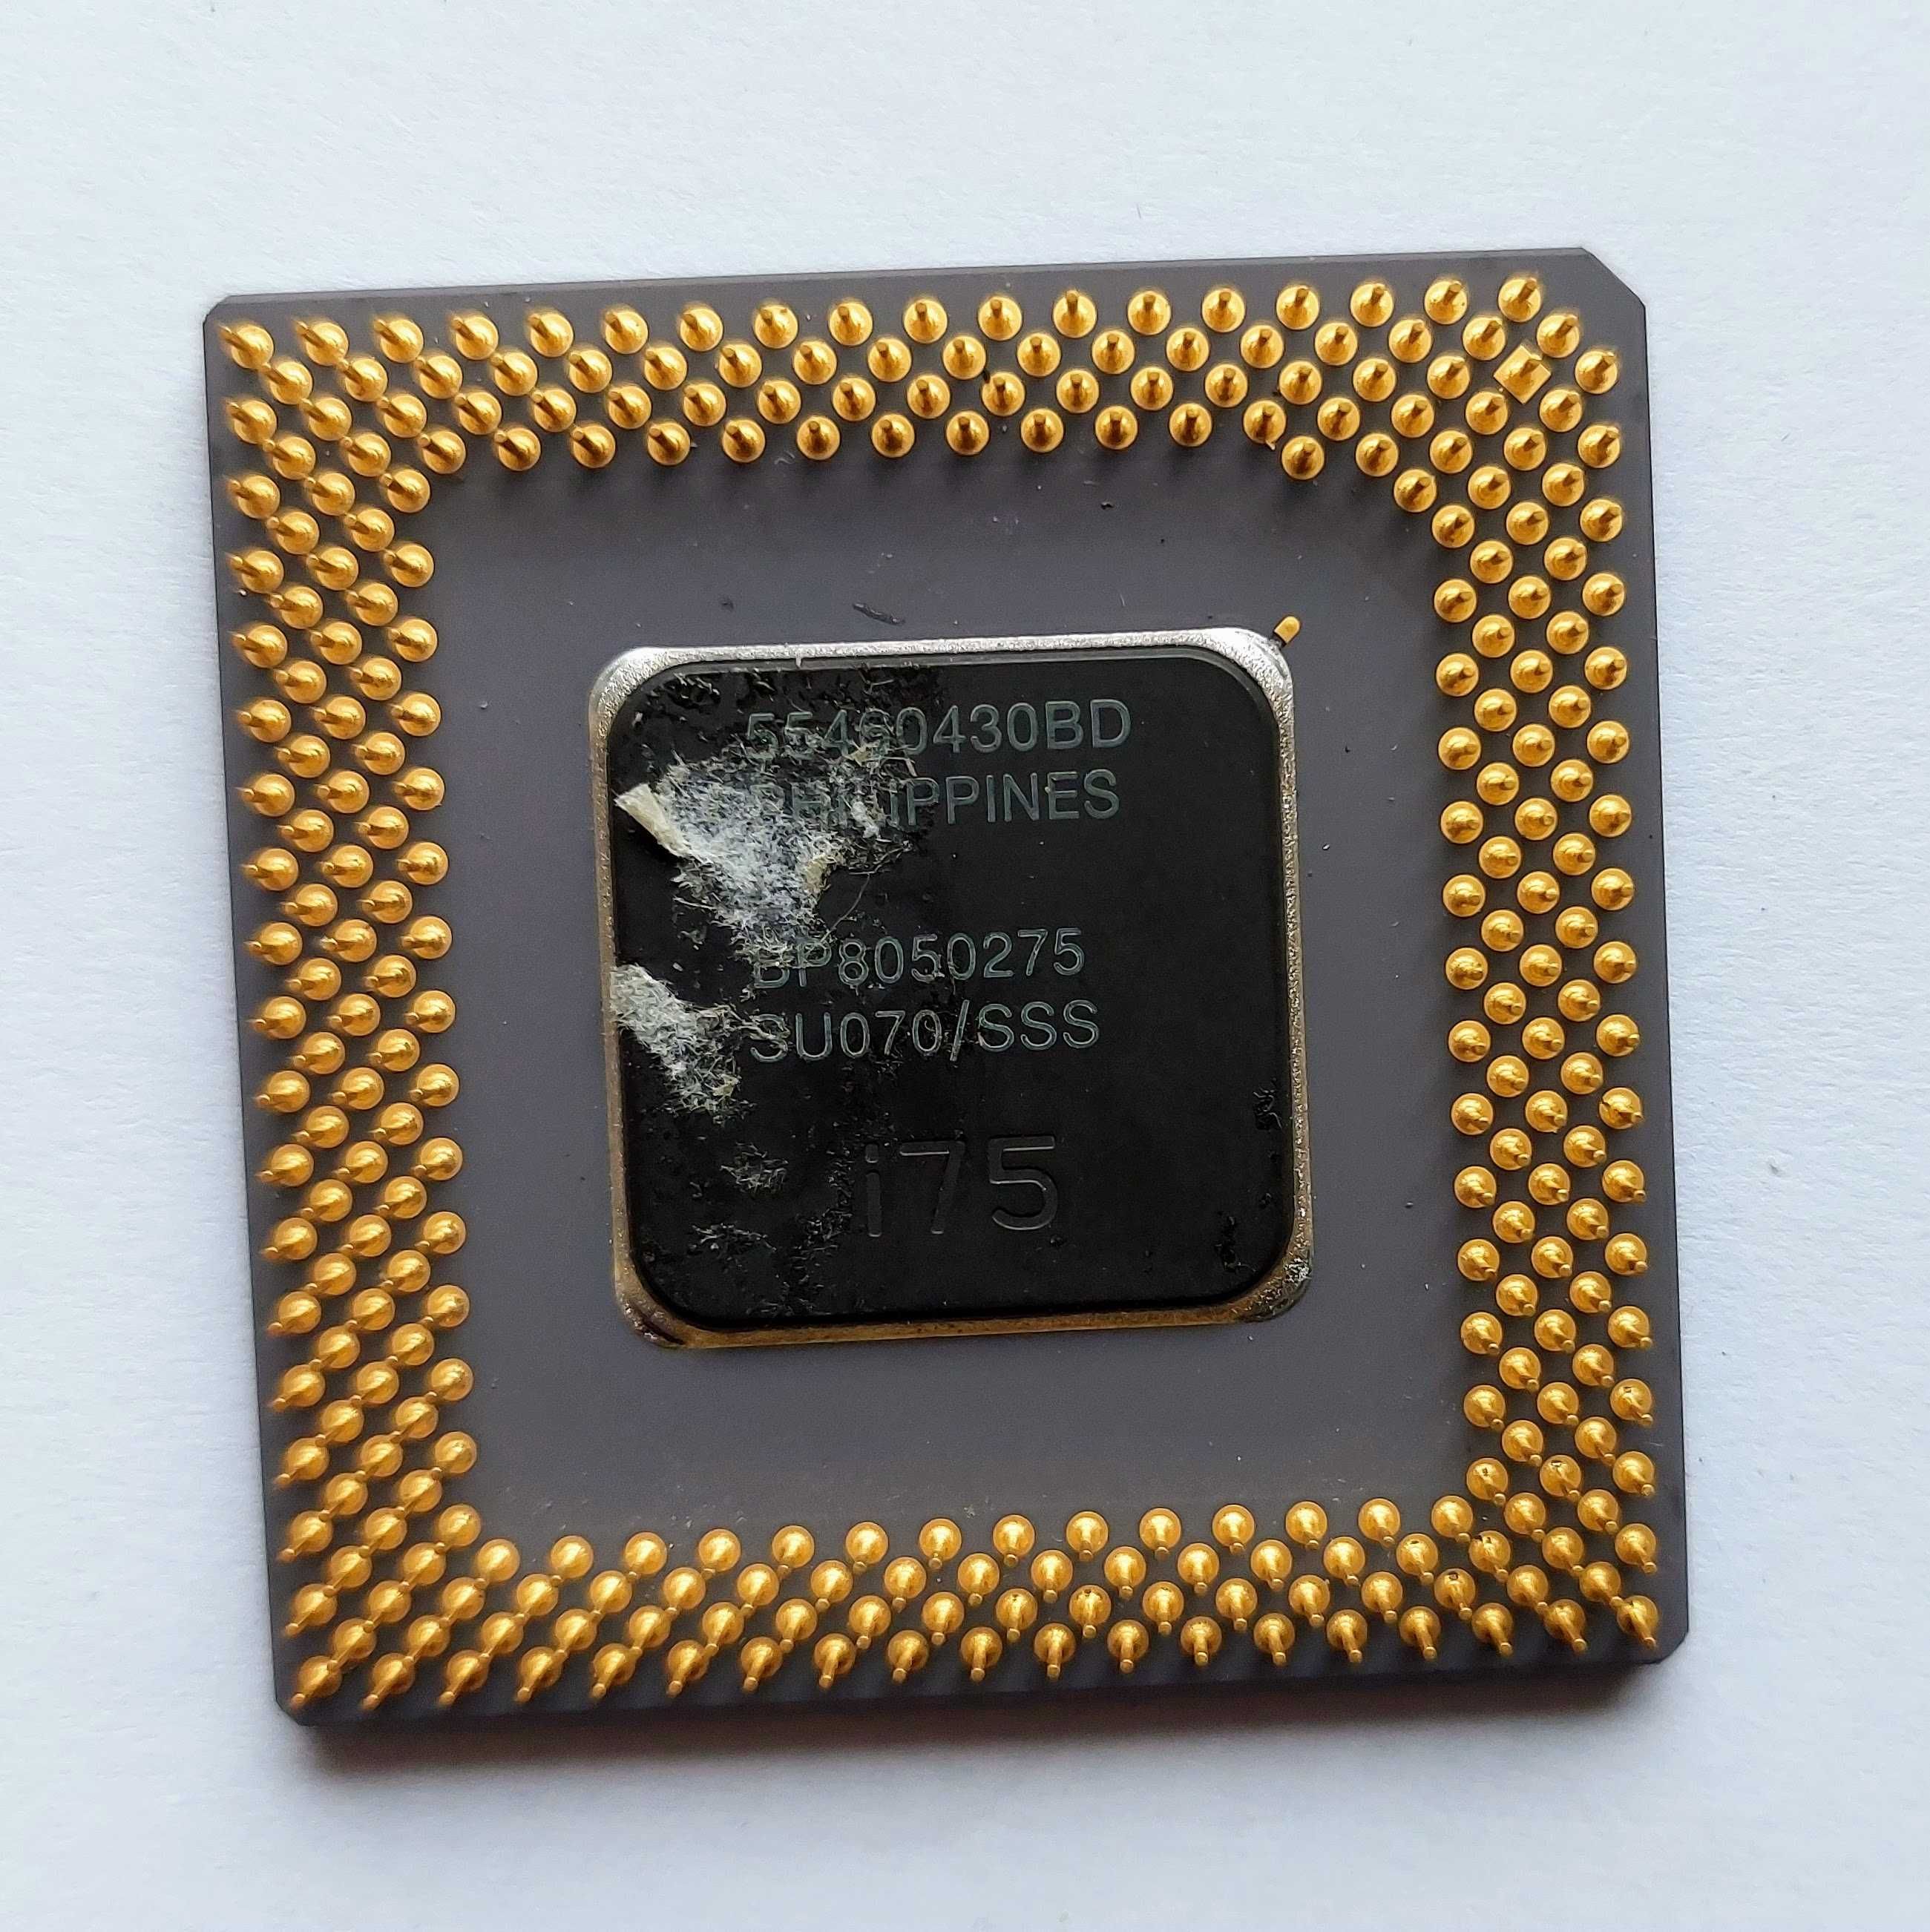 Procesor Intel 486 DX retro komputer